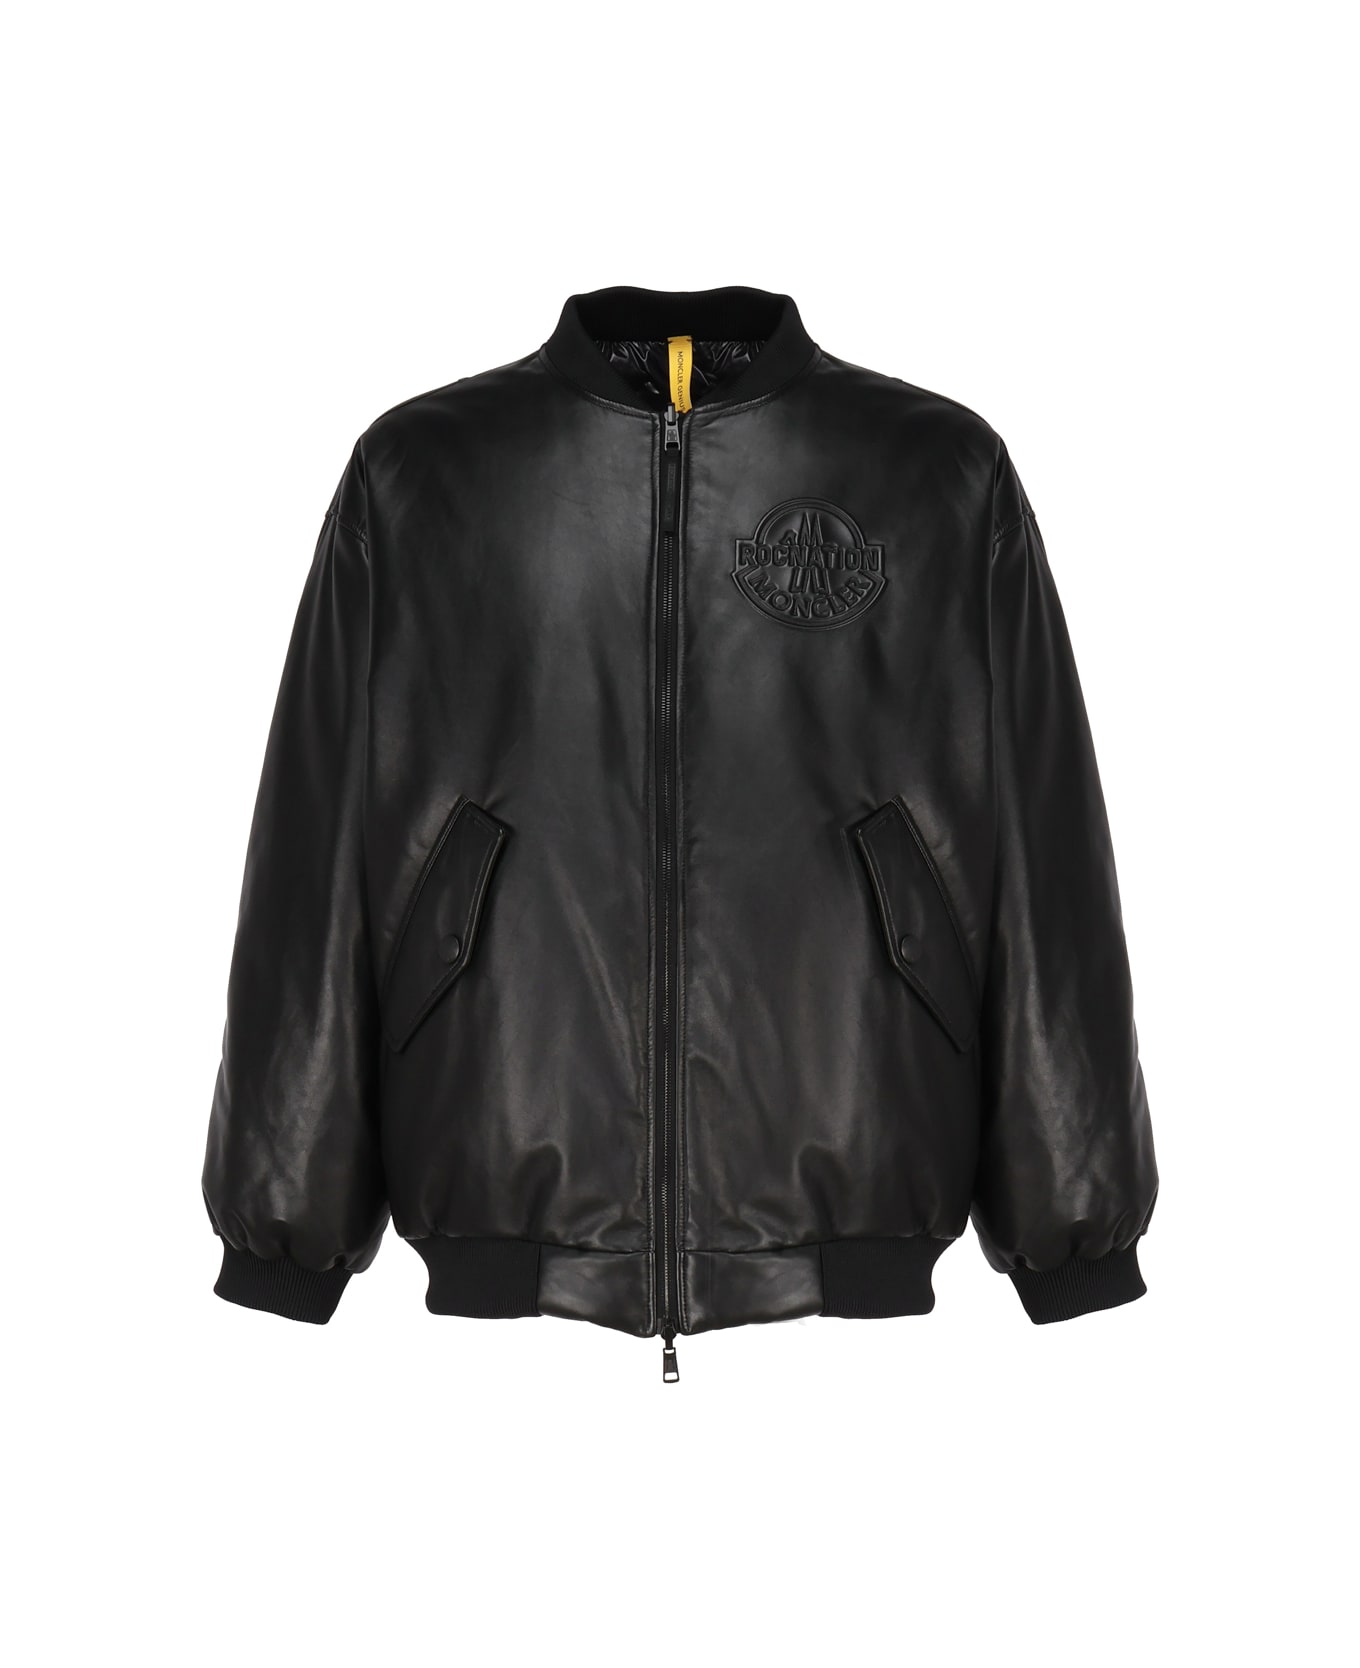 Moncler Genius Reversible Leather Jacket - Black